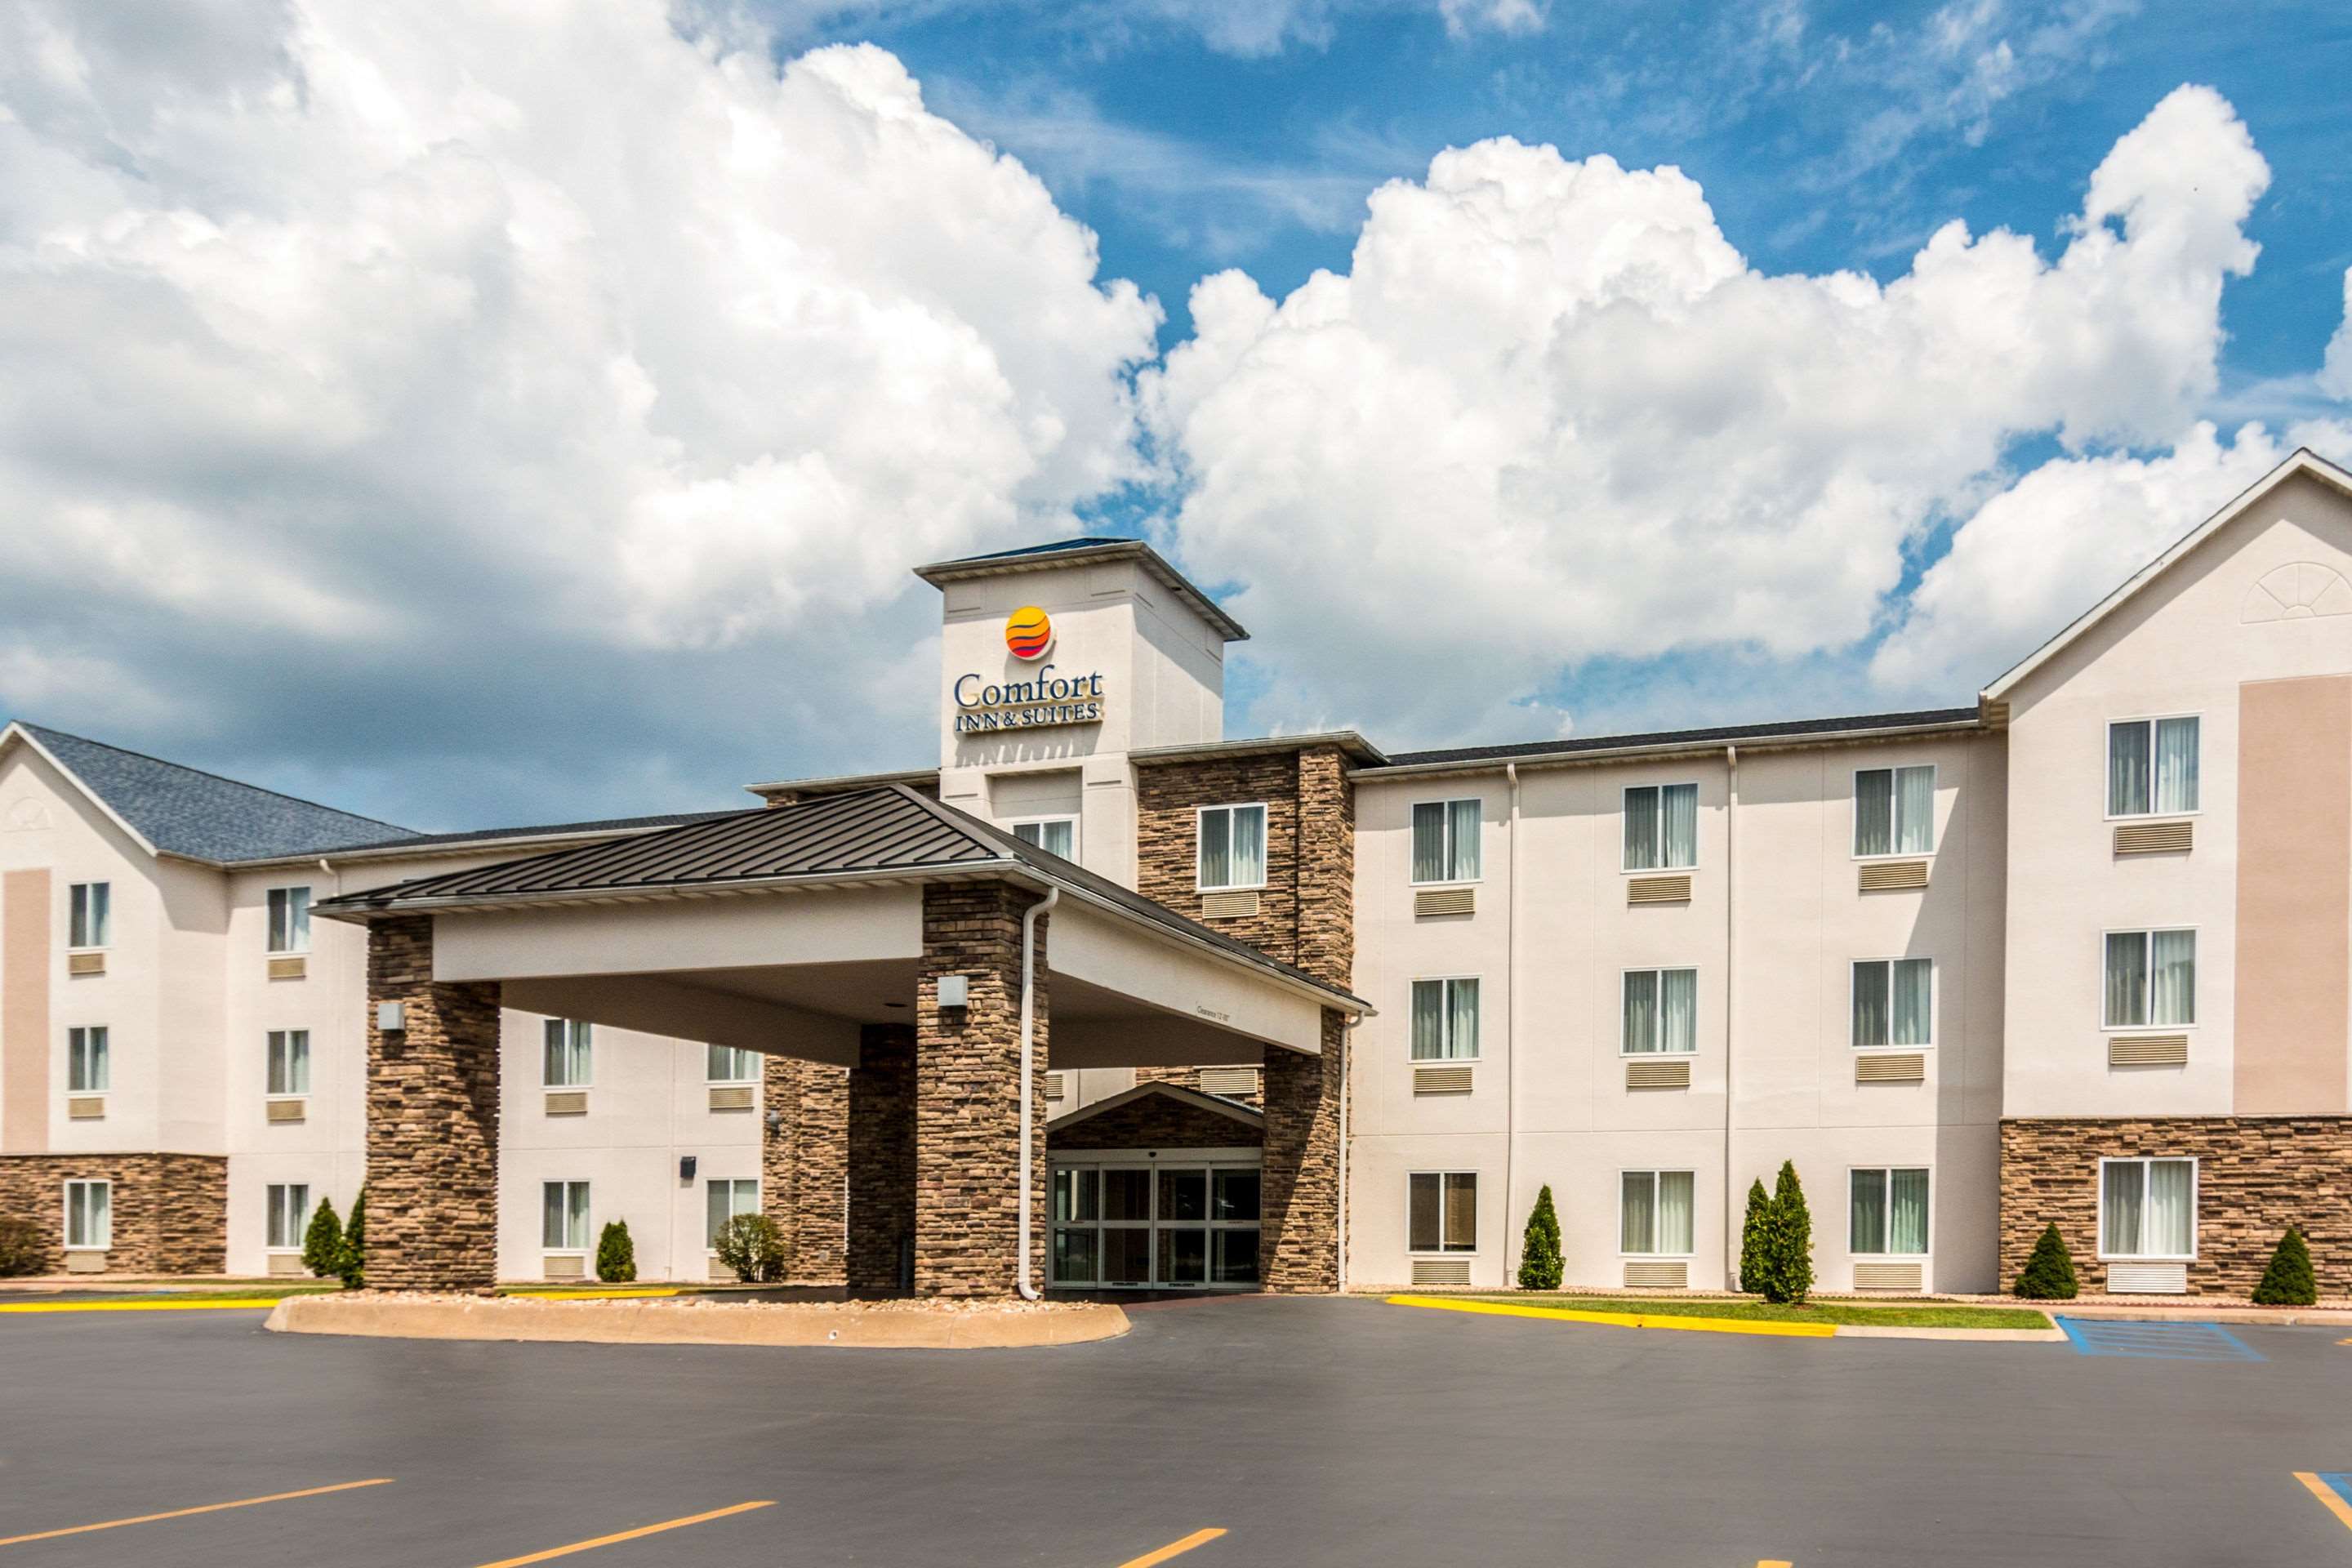 Comfort Inn & Suites - Hannibal, Hannibal Missouri () - LocalDatabase.com